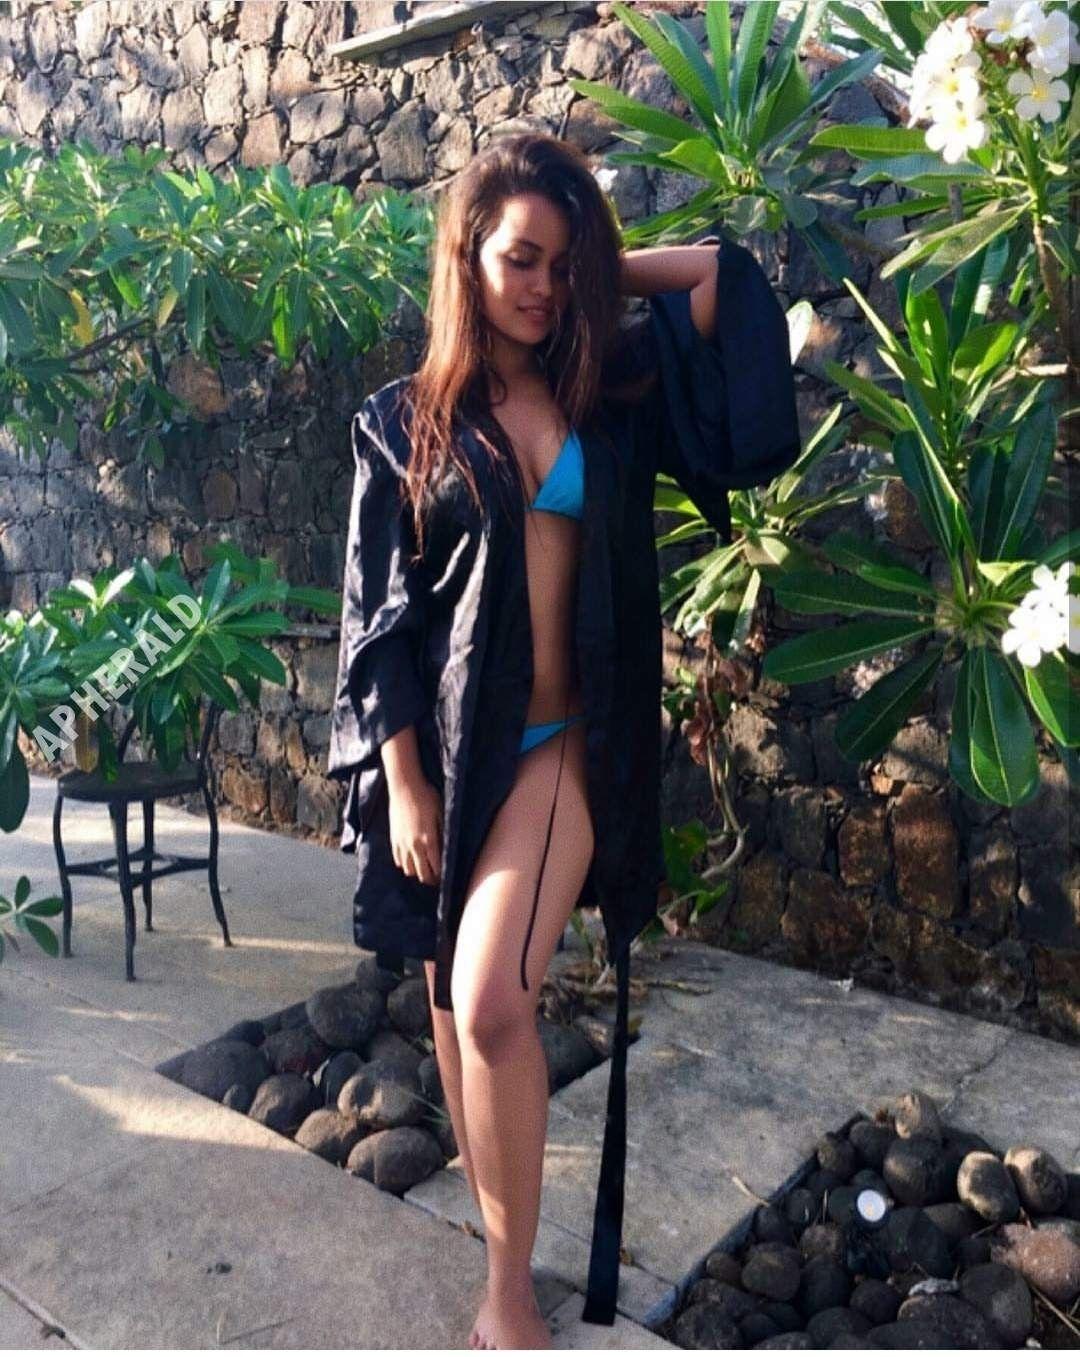 Young Model cum Singer Anaika Nair Hot Bikini Photos are too HOT to Handle!